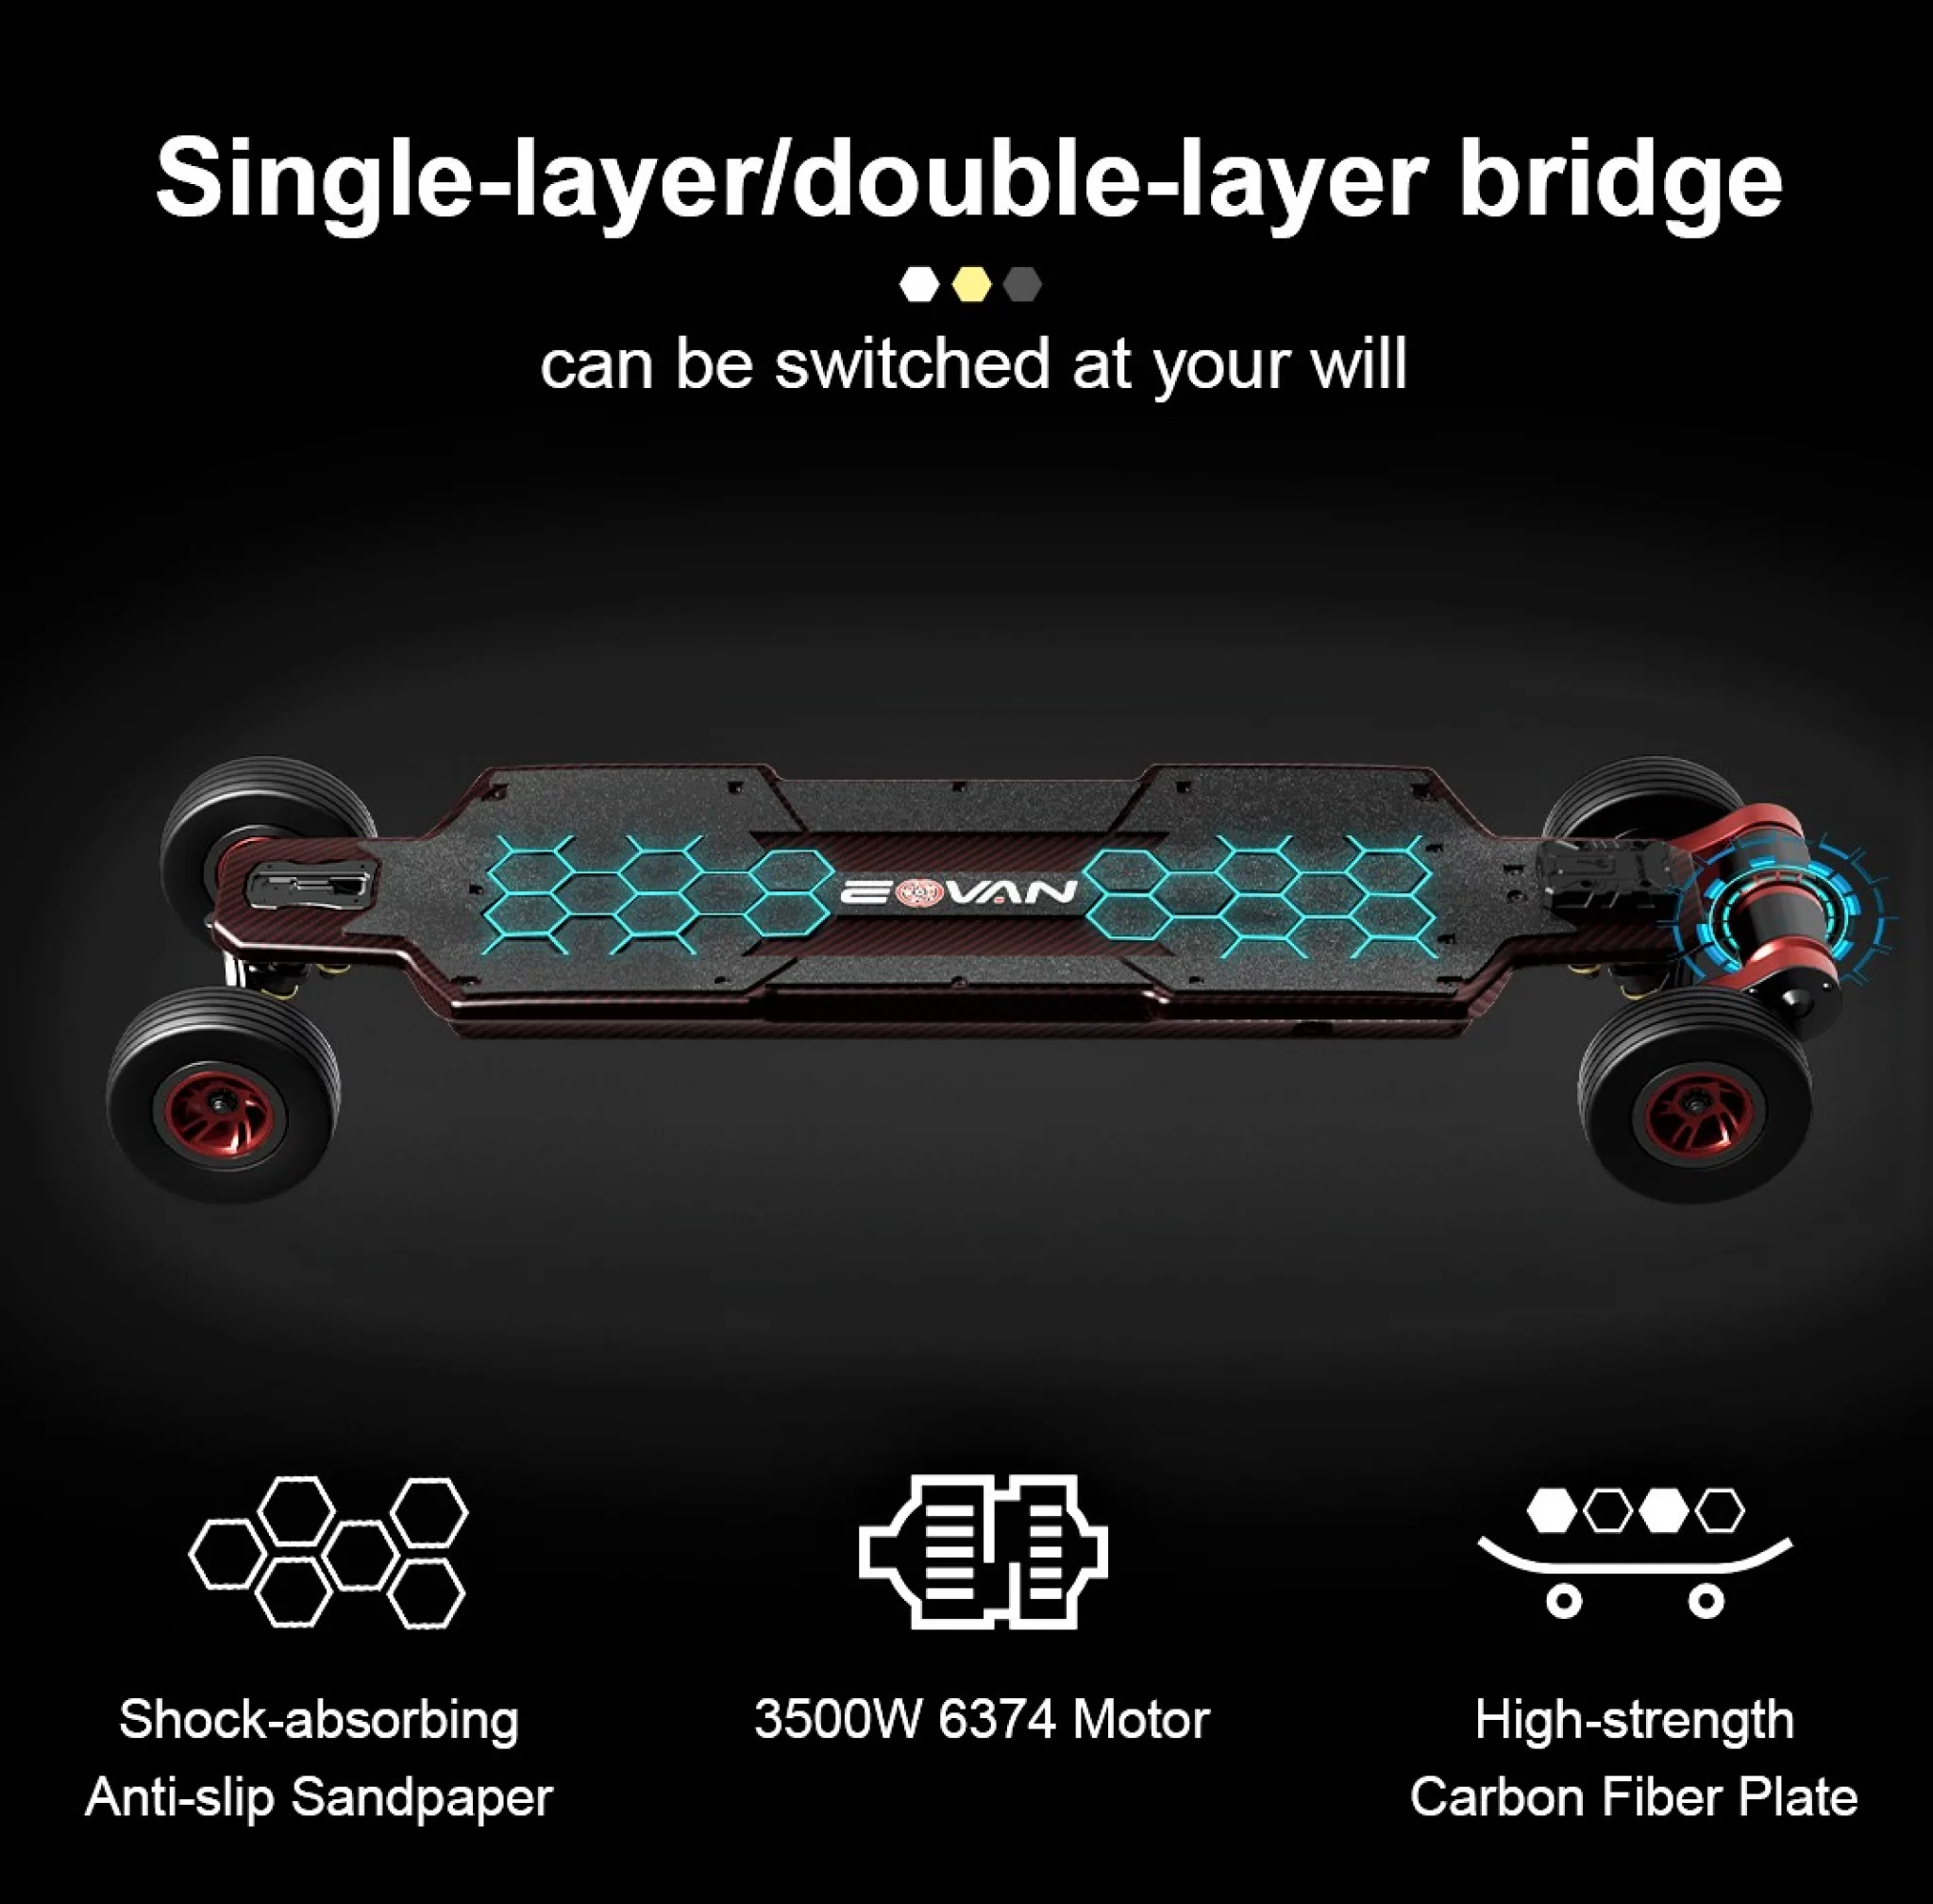 Eovan GTO Silo Skateboard Double Deck Bridge